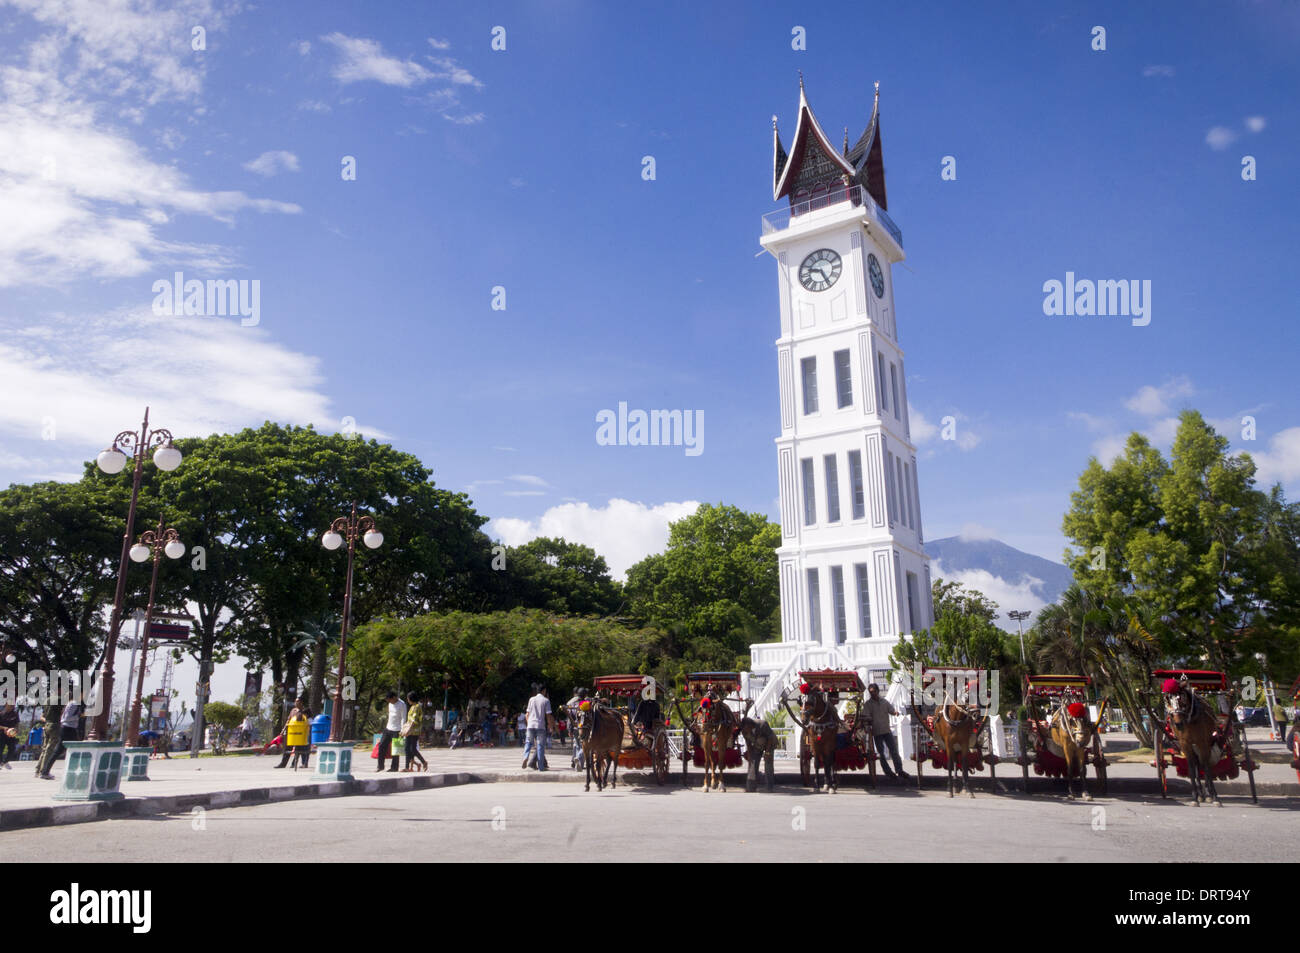 bukittinggi clock tow, jam gadang Stock Photo